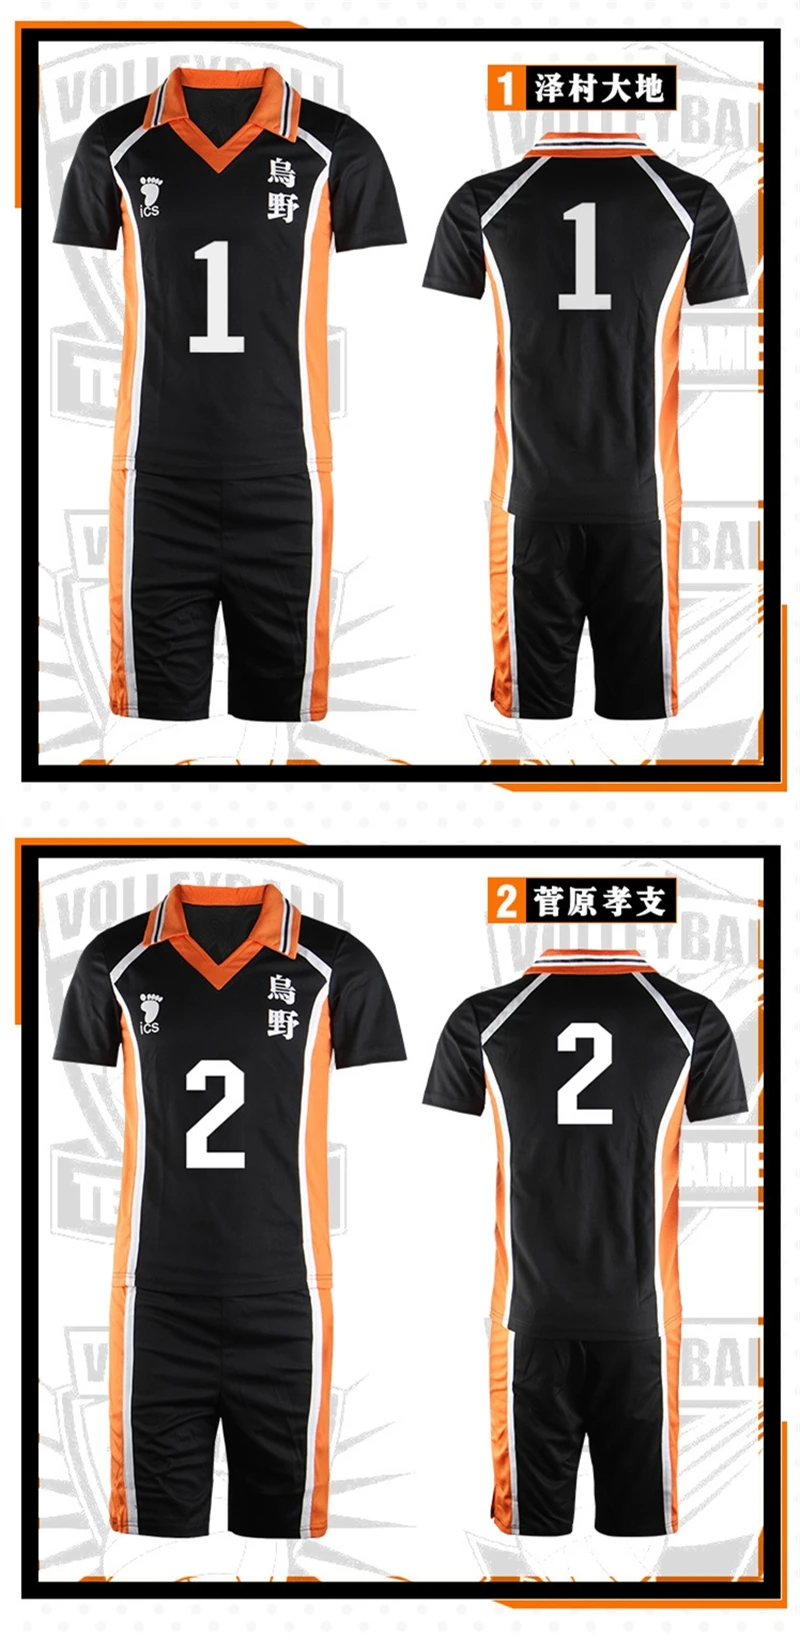 New Anime Haikyuu!! Karasuno High School #3 Azumane Asahi Volleyball Club  Jersey Cosplay Costume Sports Wear Uniform M L XL XXL - AliExpress